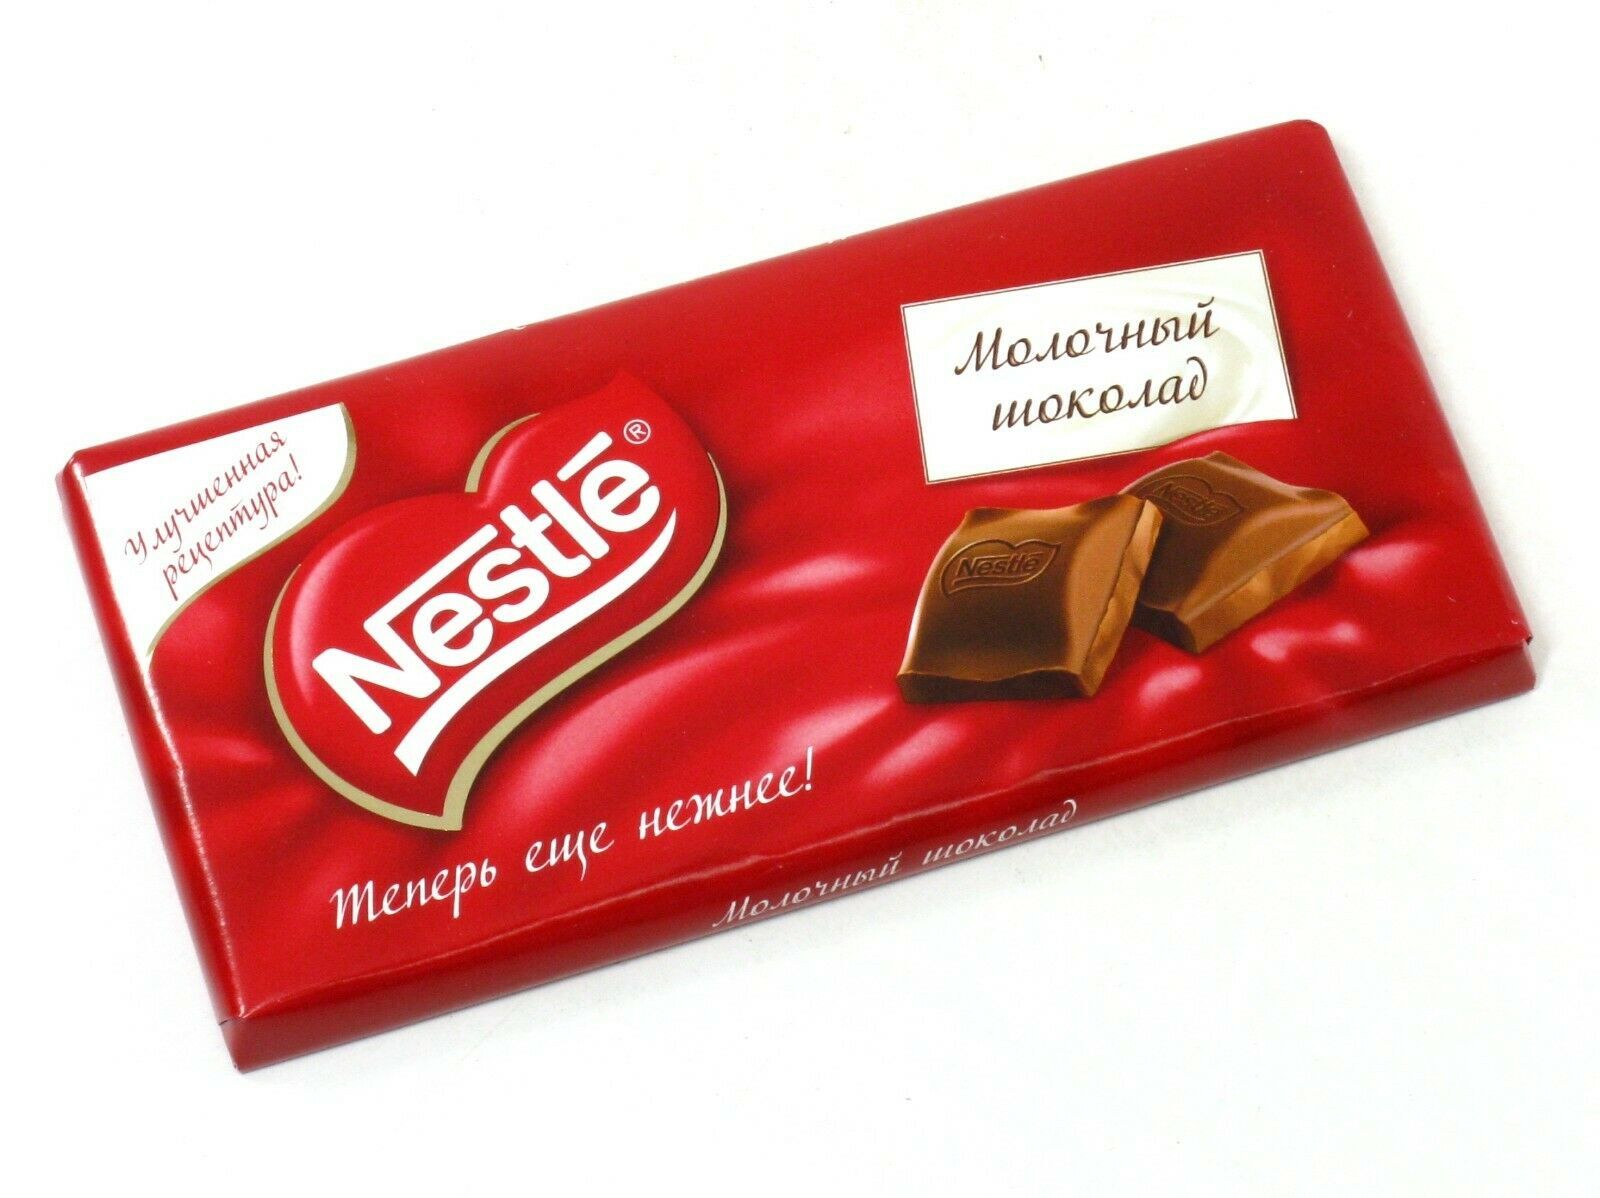 Nestle Chocolate